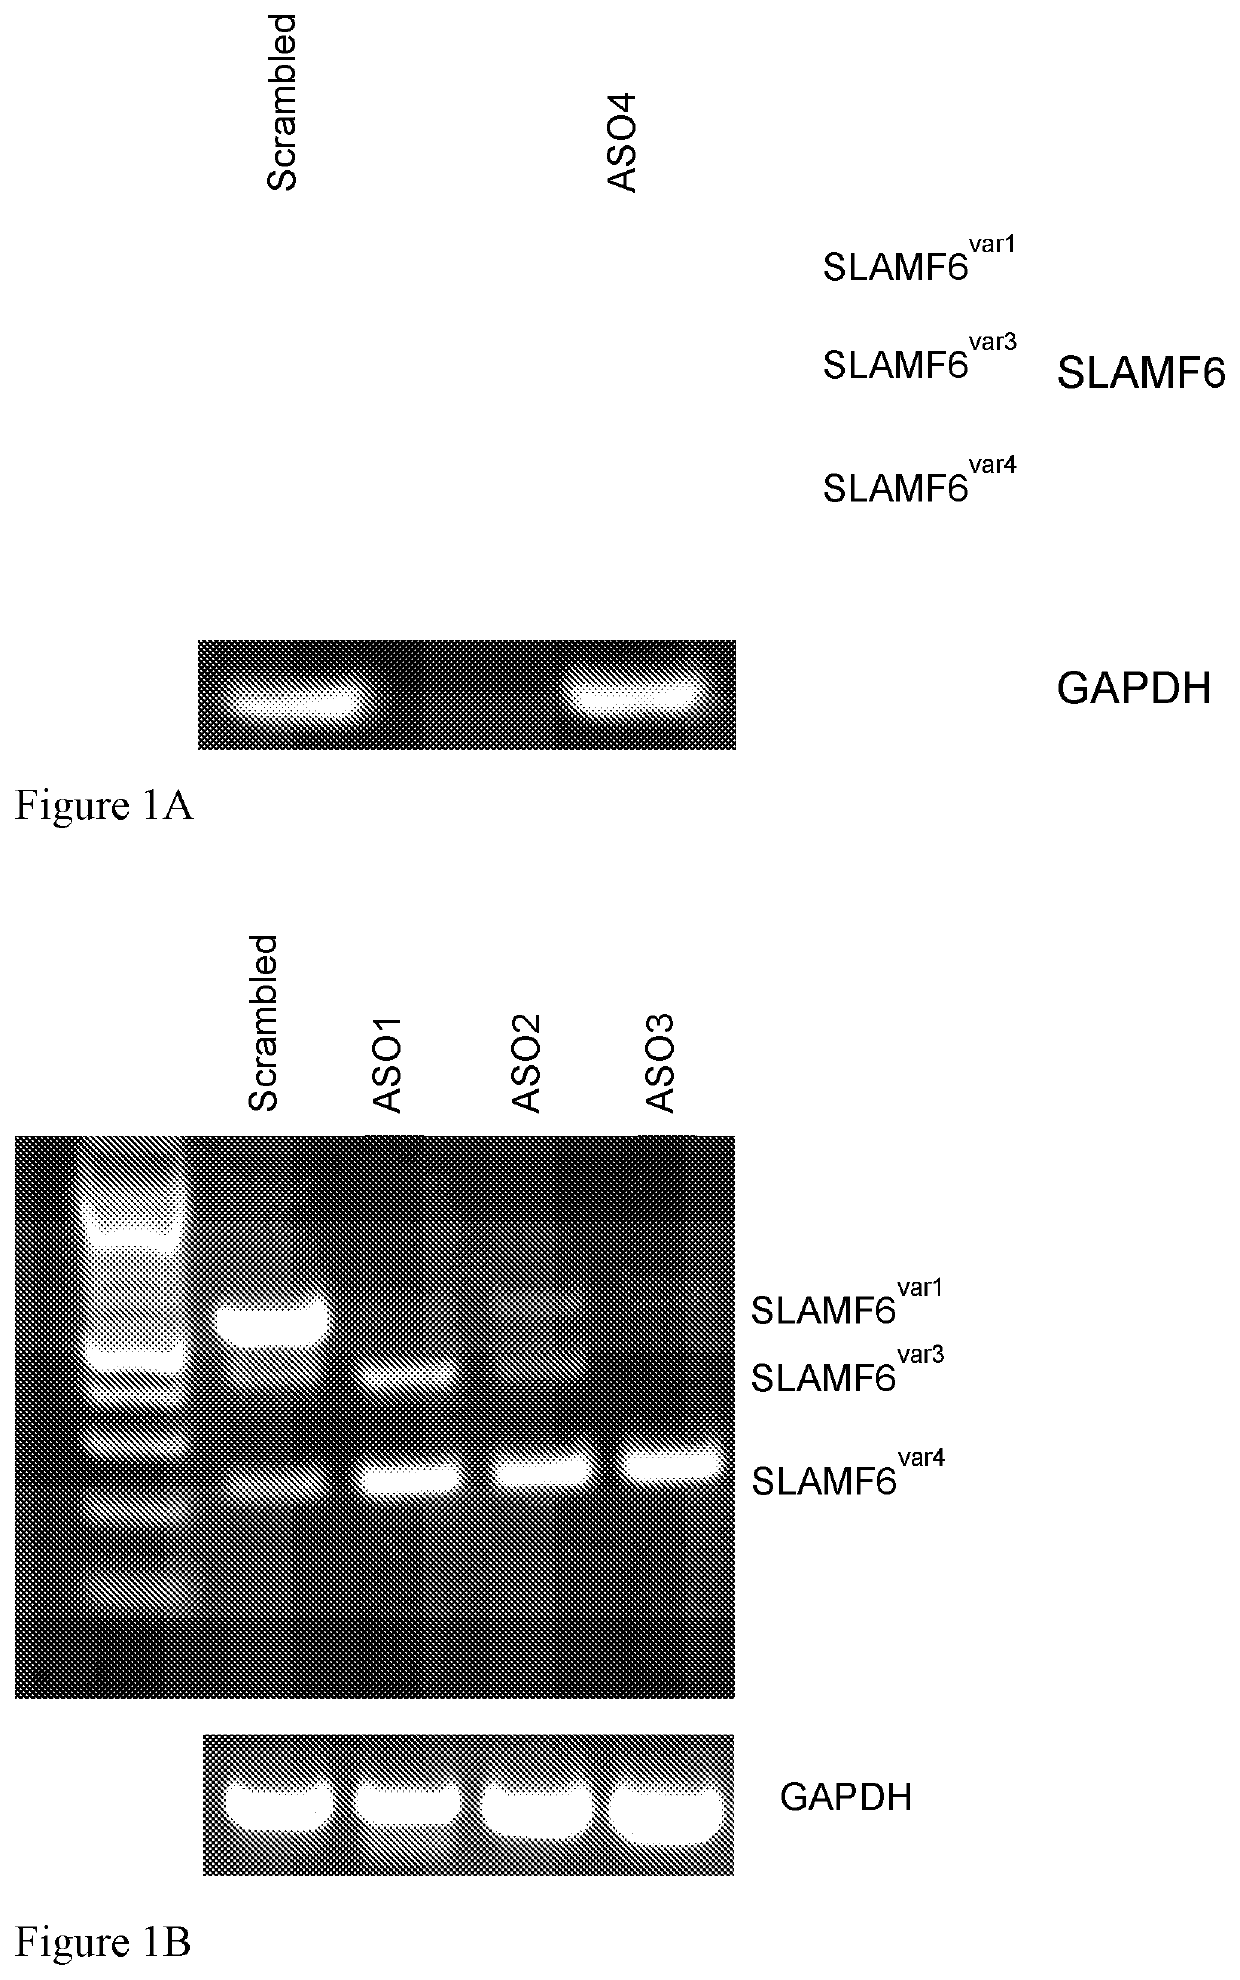 Nucleic acid agents modulating slamf6 isoforms